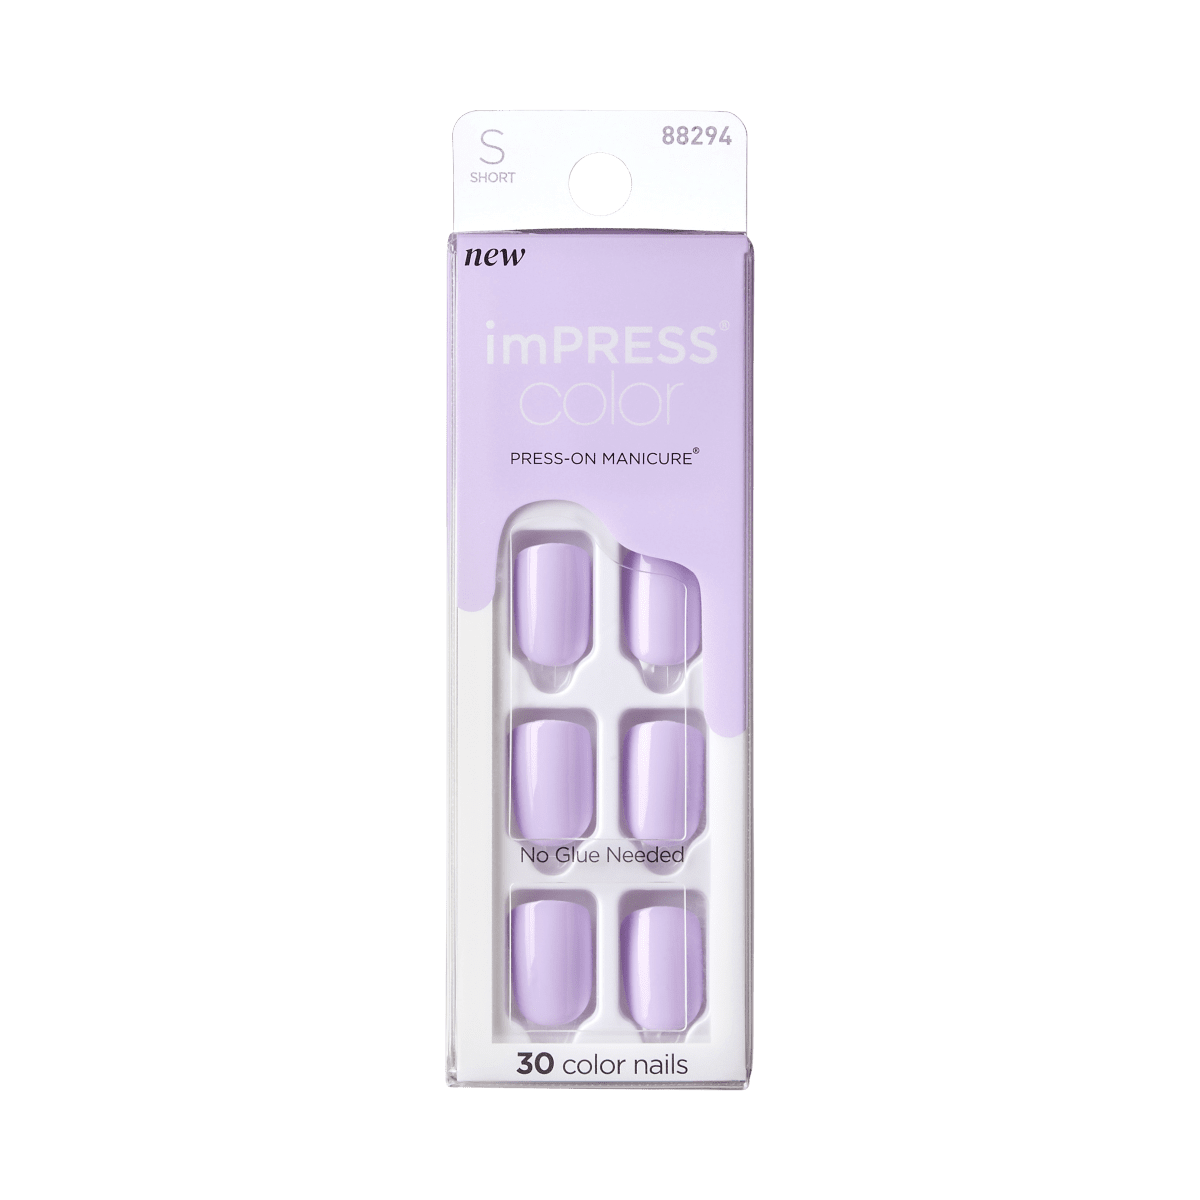 imPRESS Color Press-On Manicure - Vivid Lavender